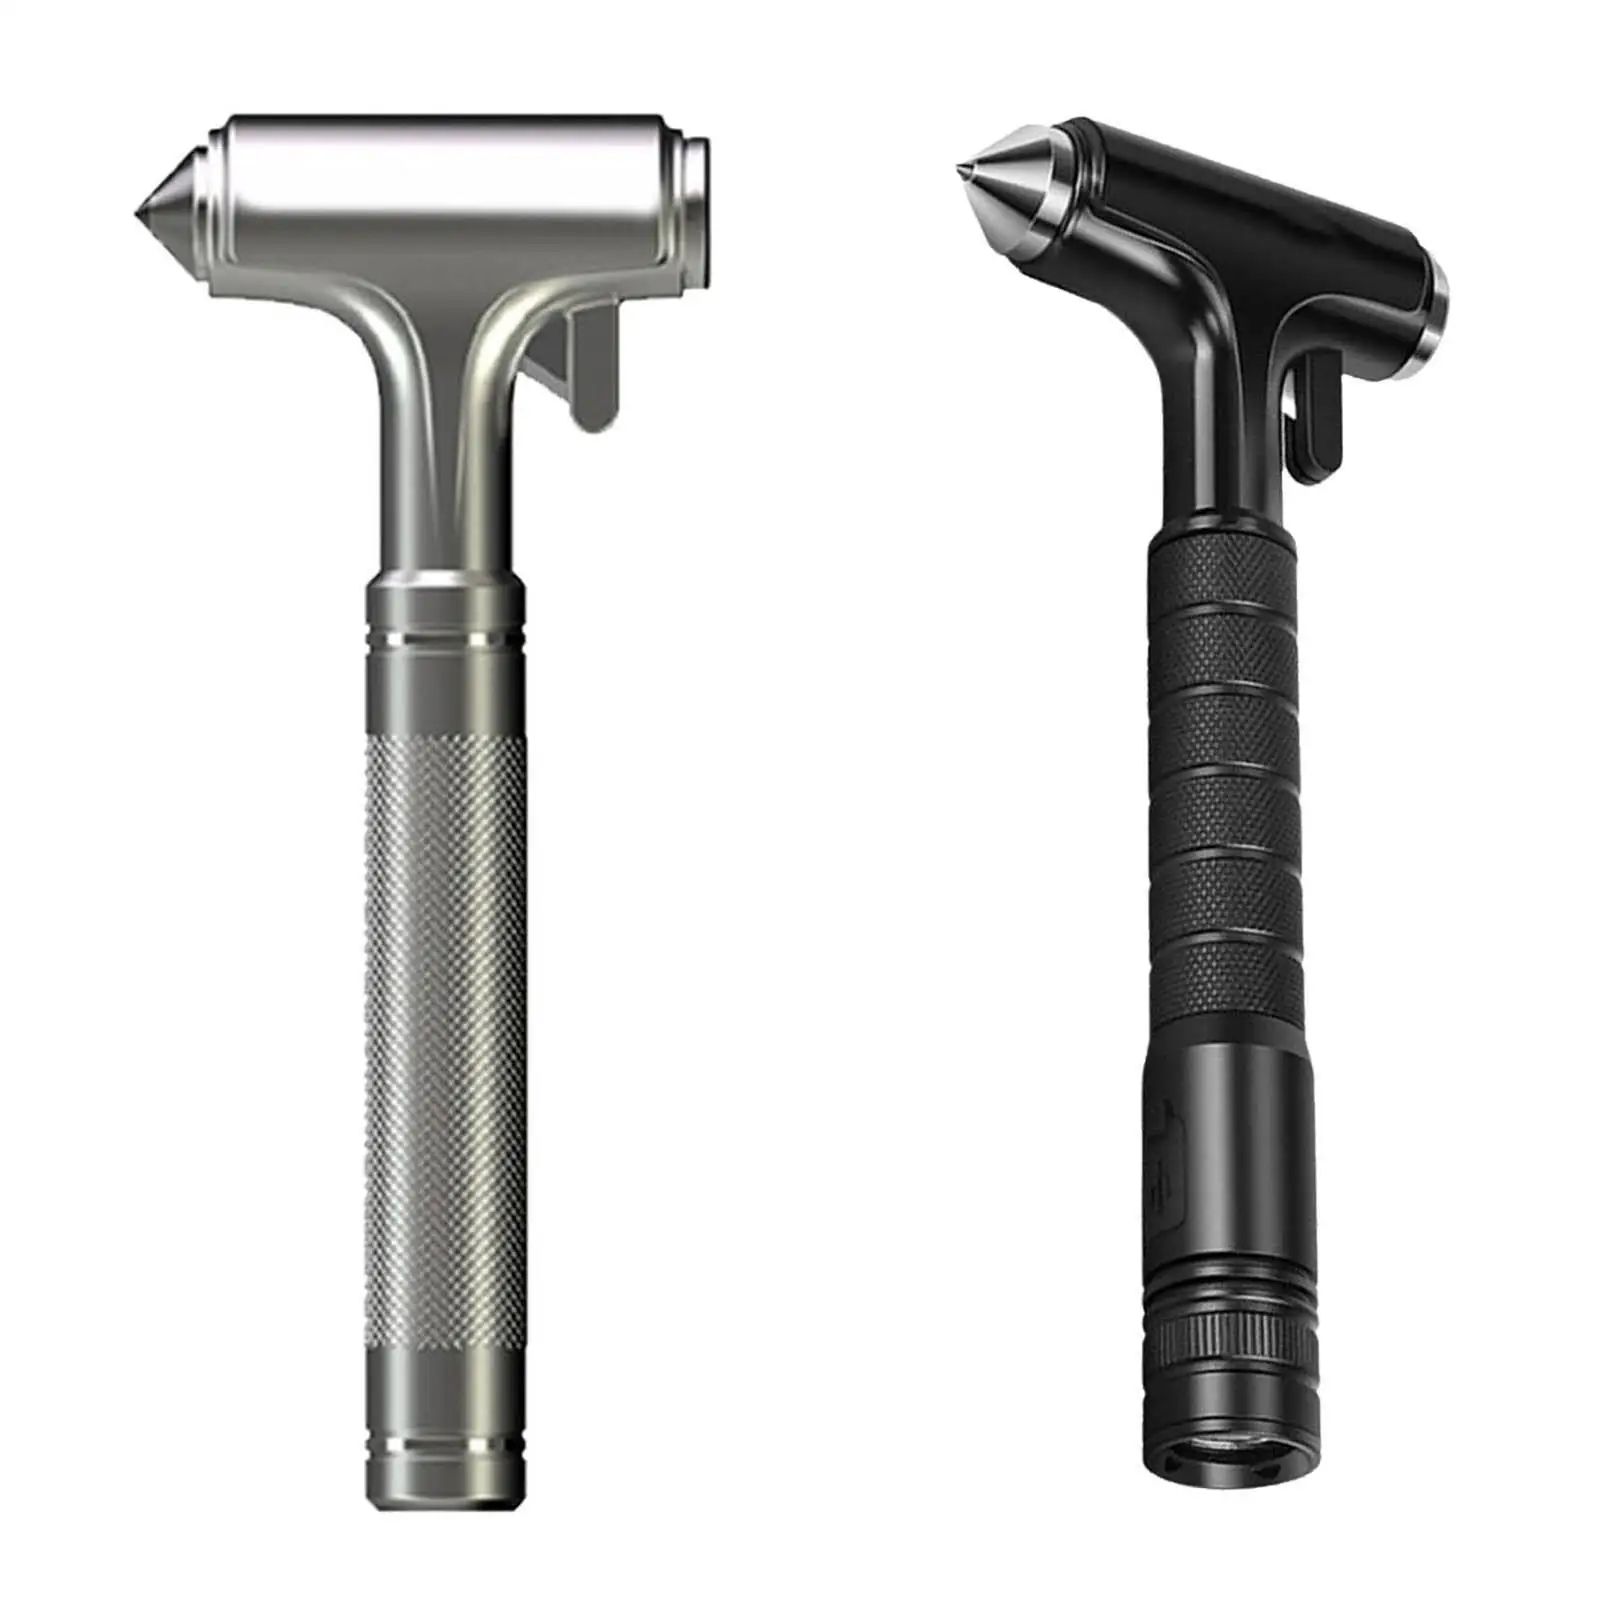 Car Safety Hammer, Seatbelt Cutter Escape Kit, Supplies Auto Multi Function